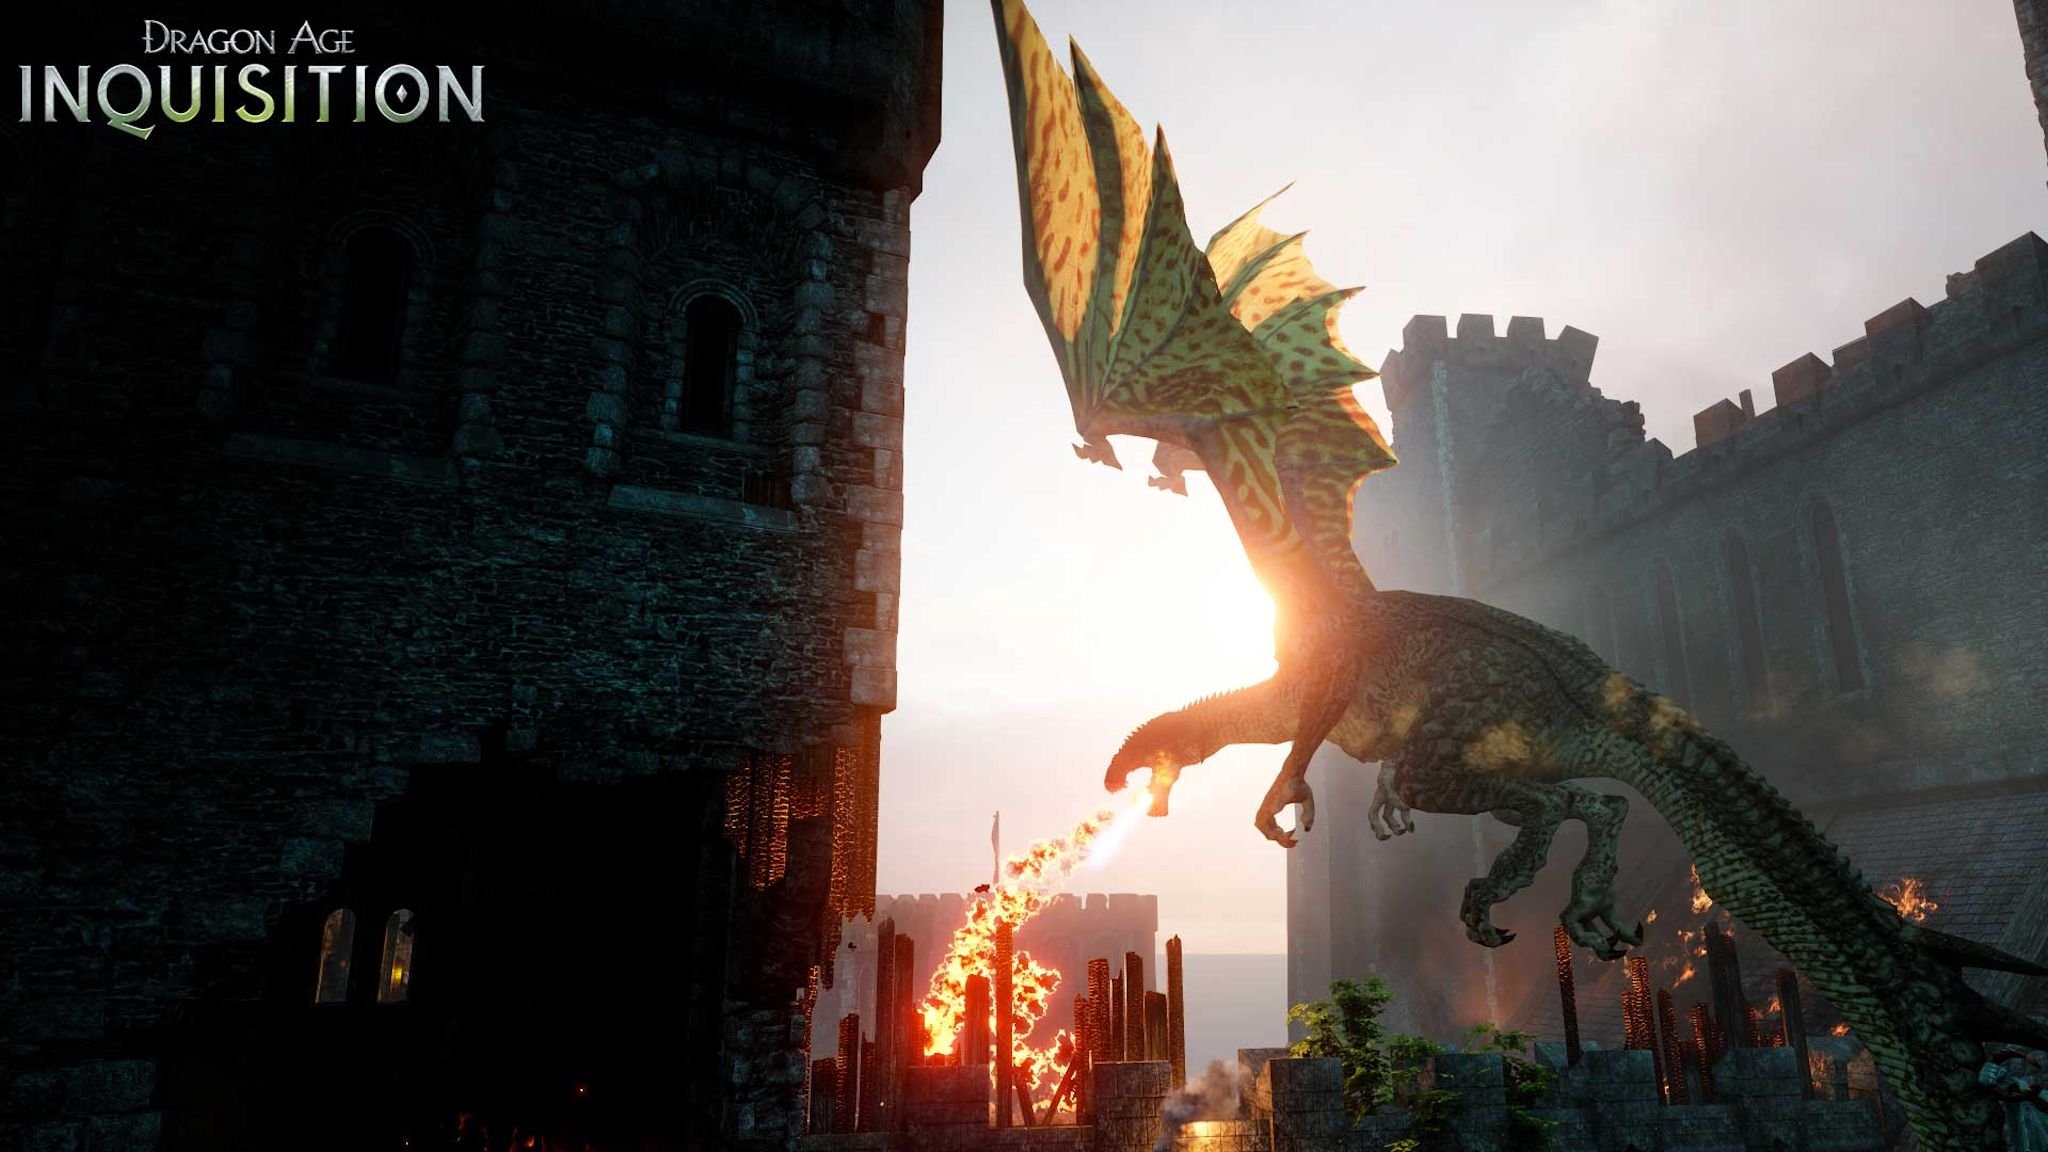 Dragon-Age-Inquisition-Dragonslayer-Multiplayer-update-teaser.jpg